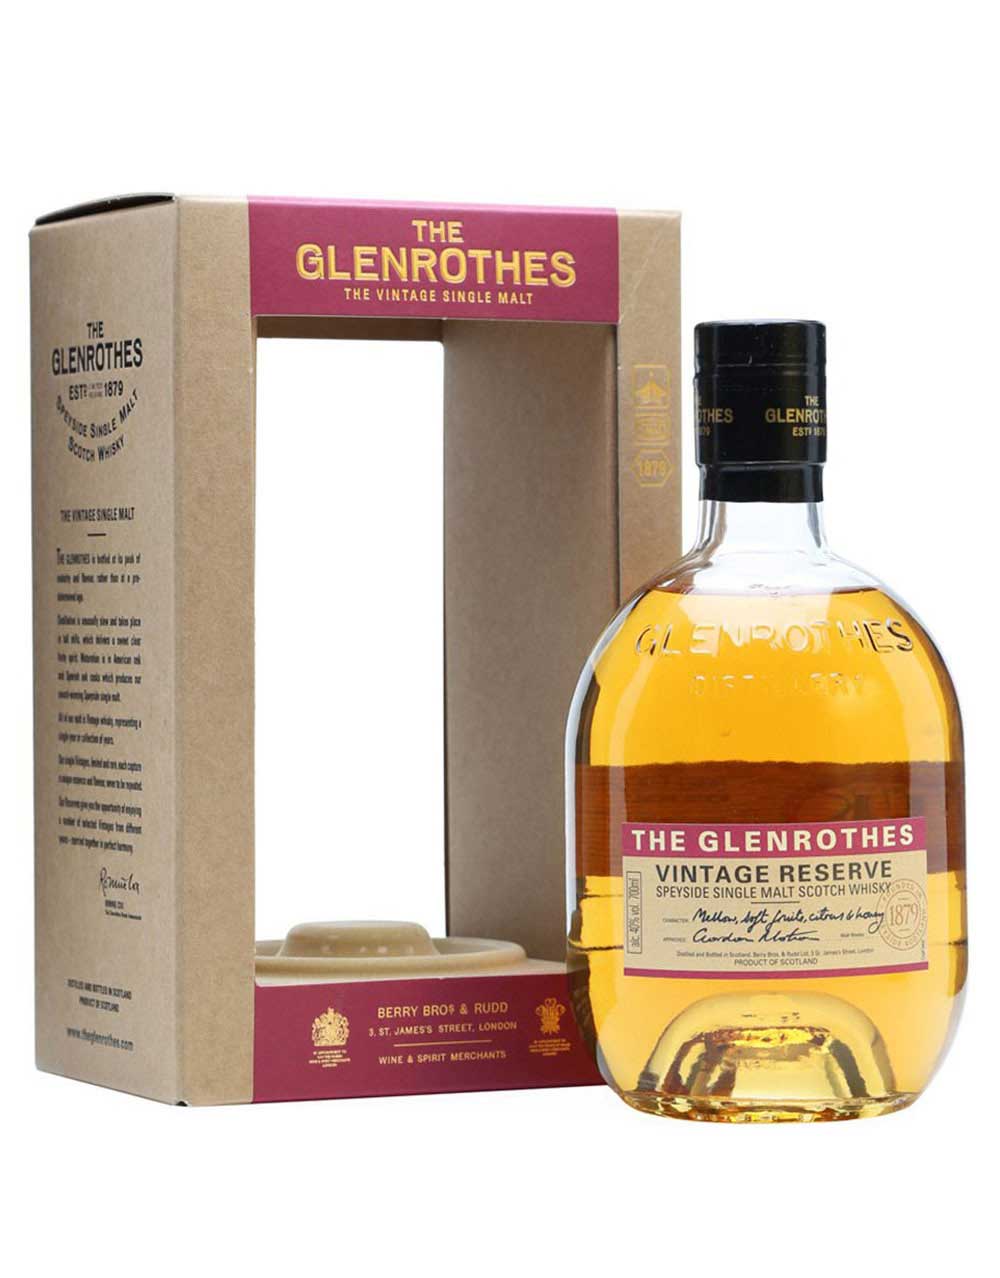 The Glenrothes Vintage Reserve Scotch Whisky